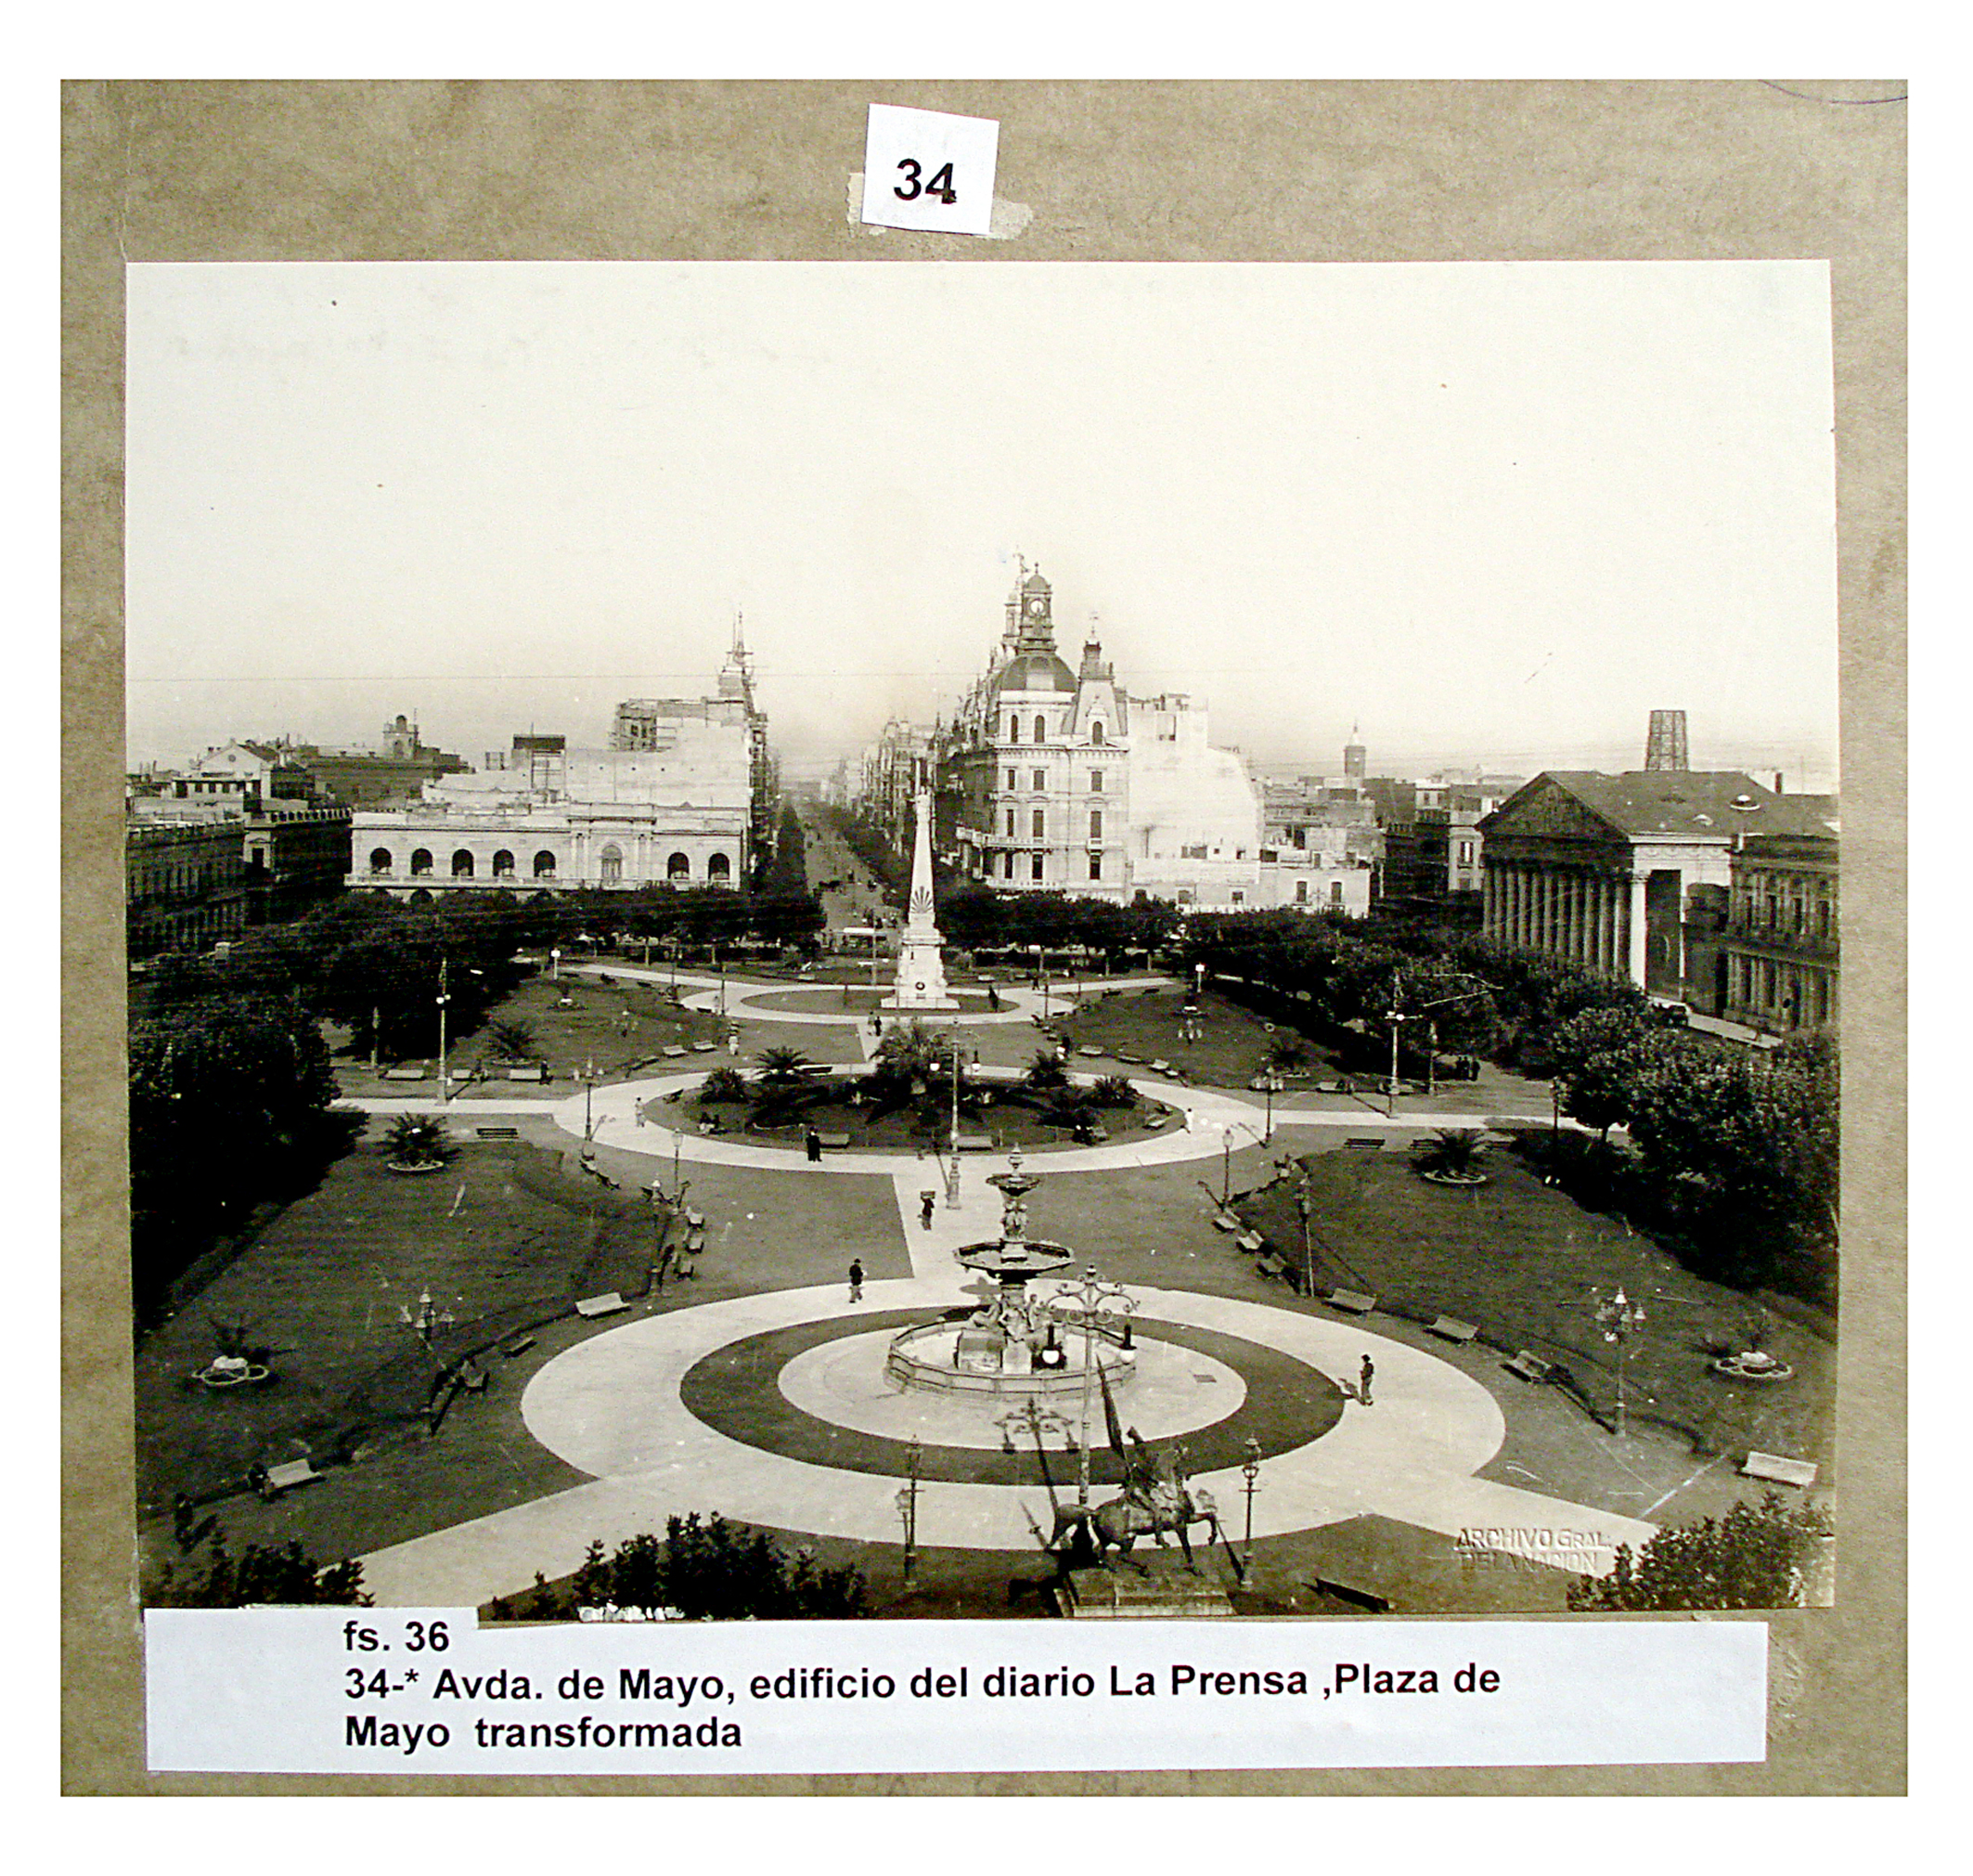 Plaza de Mayo transformada